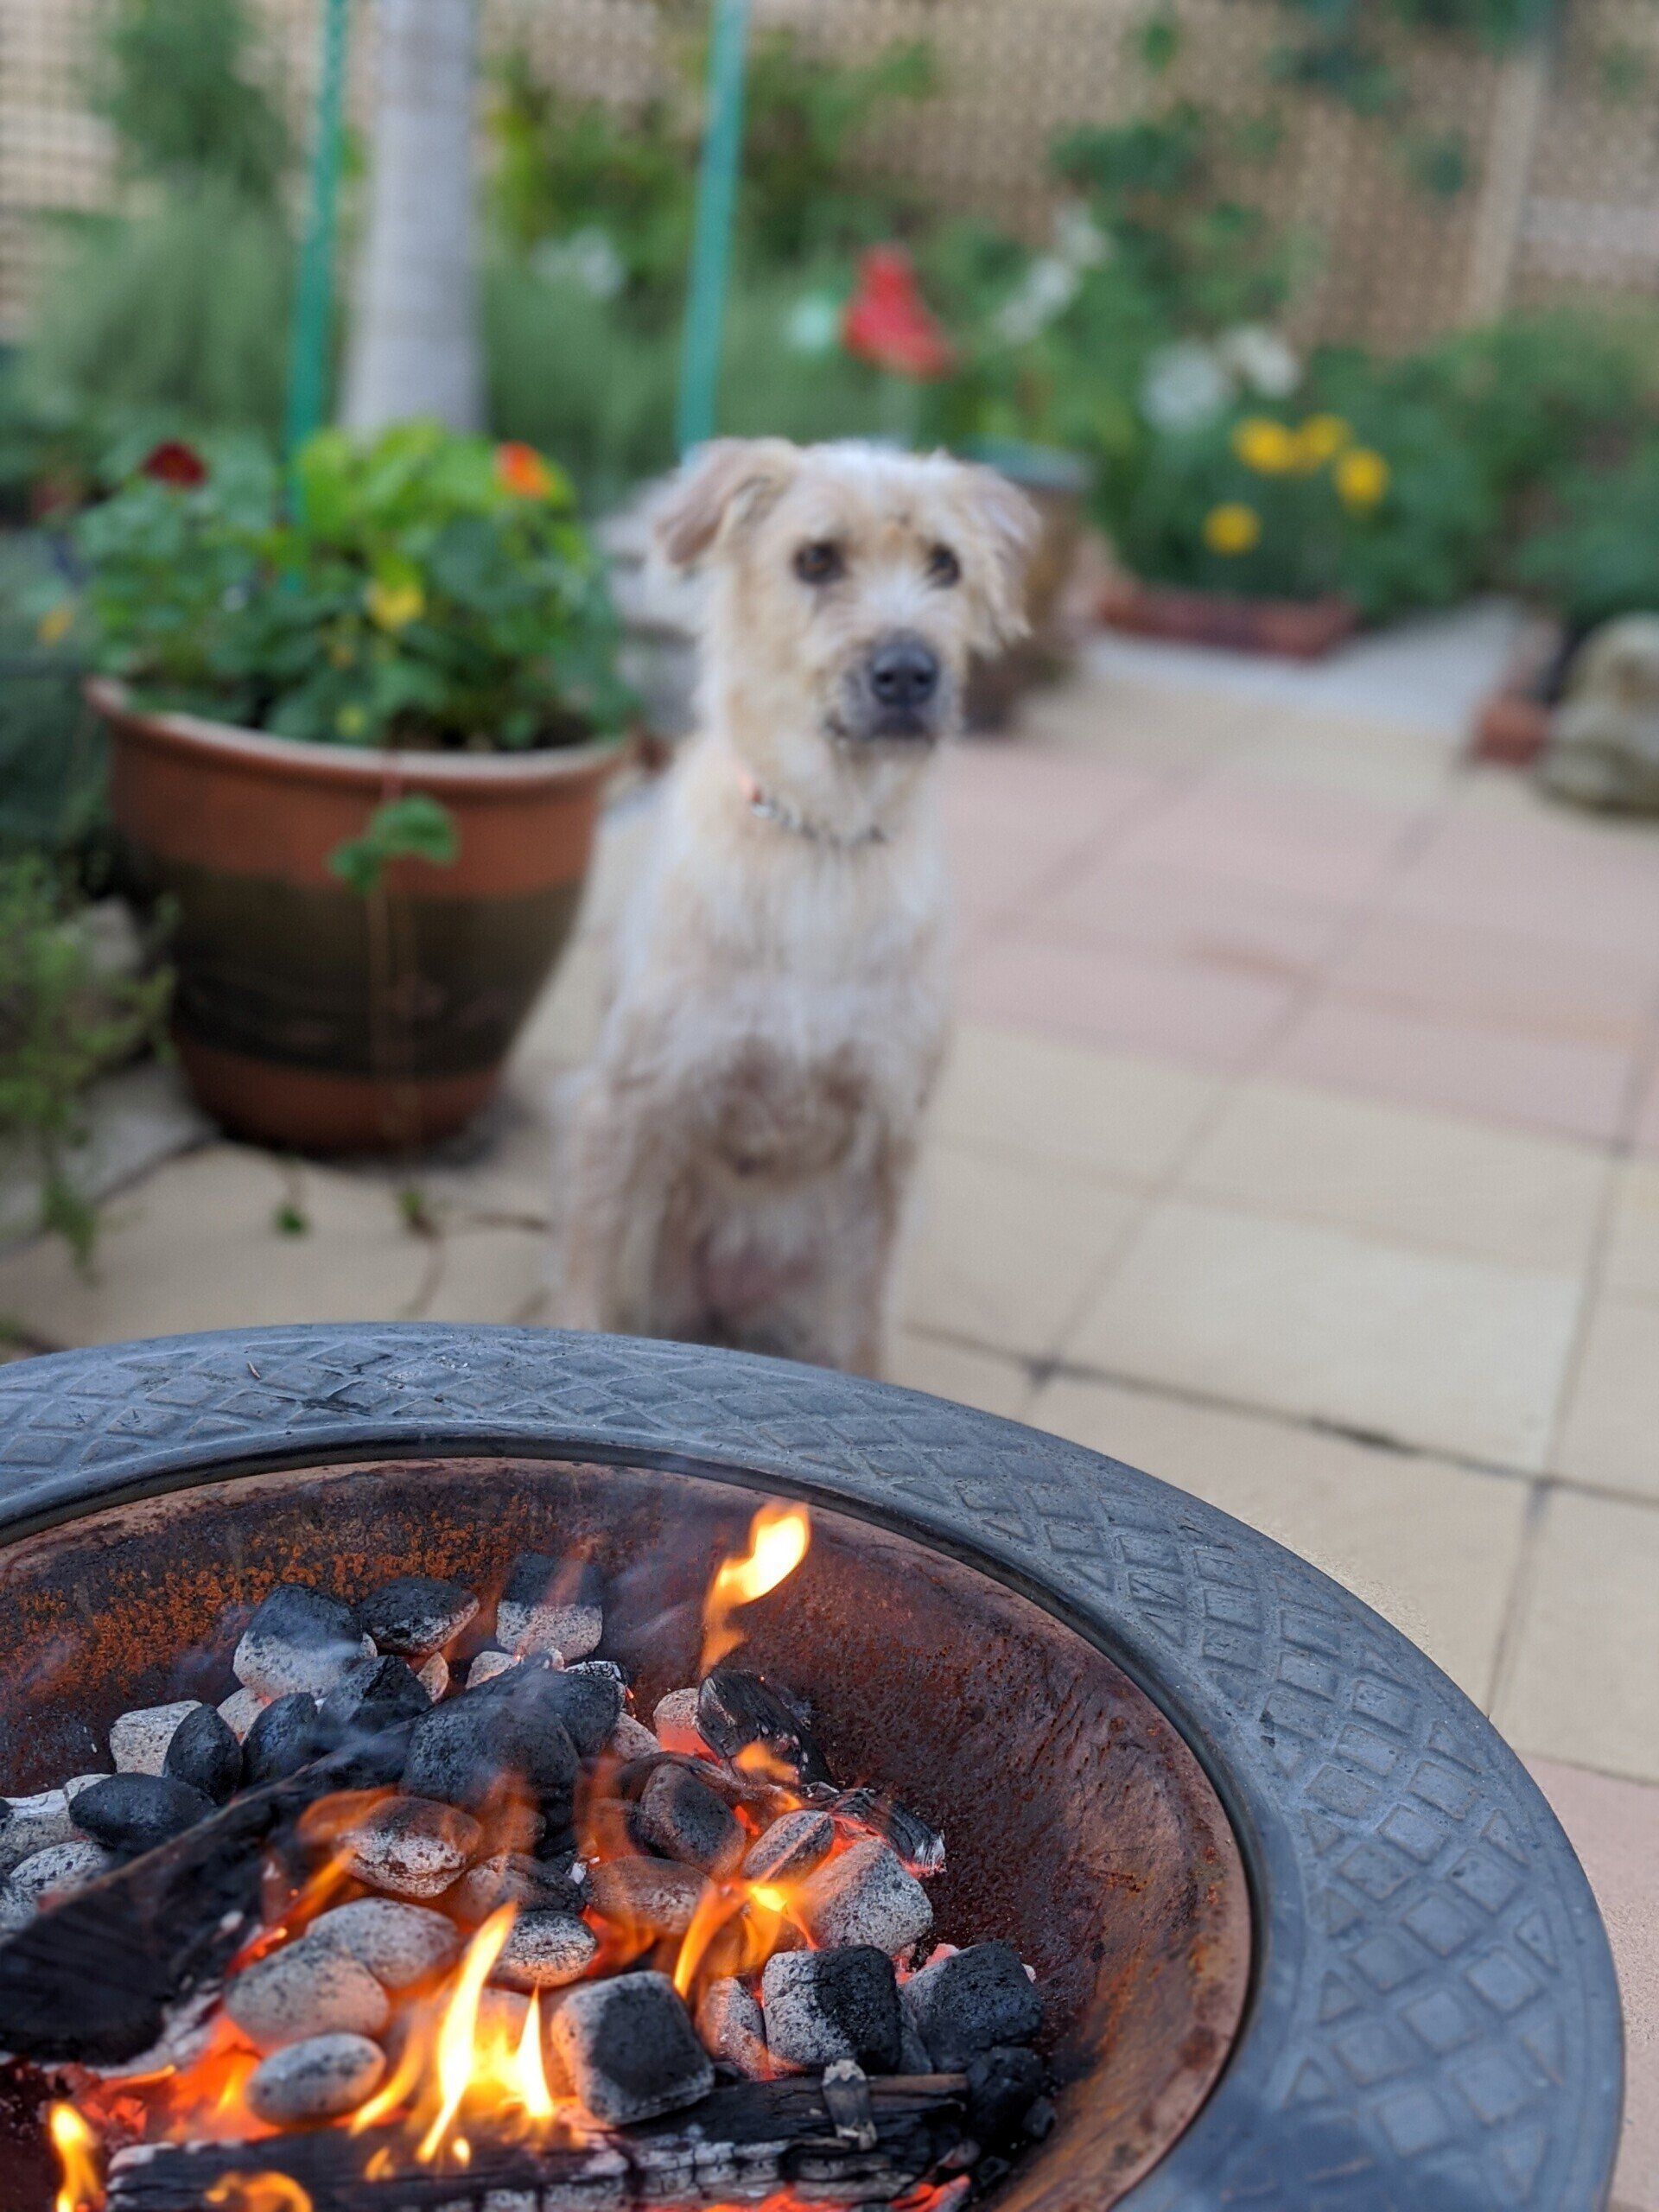 Nala sitting by the firepit